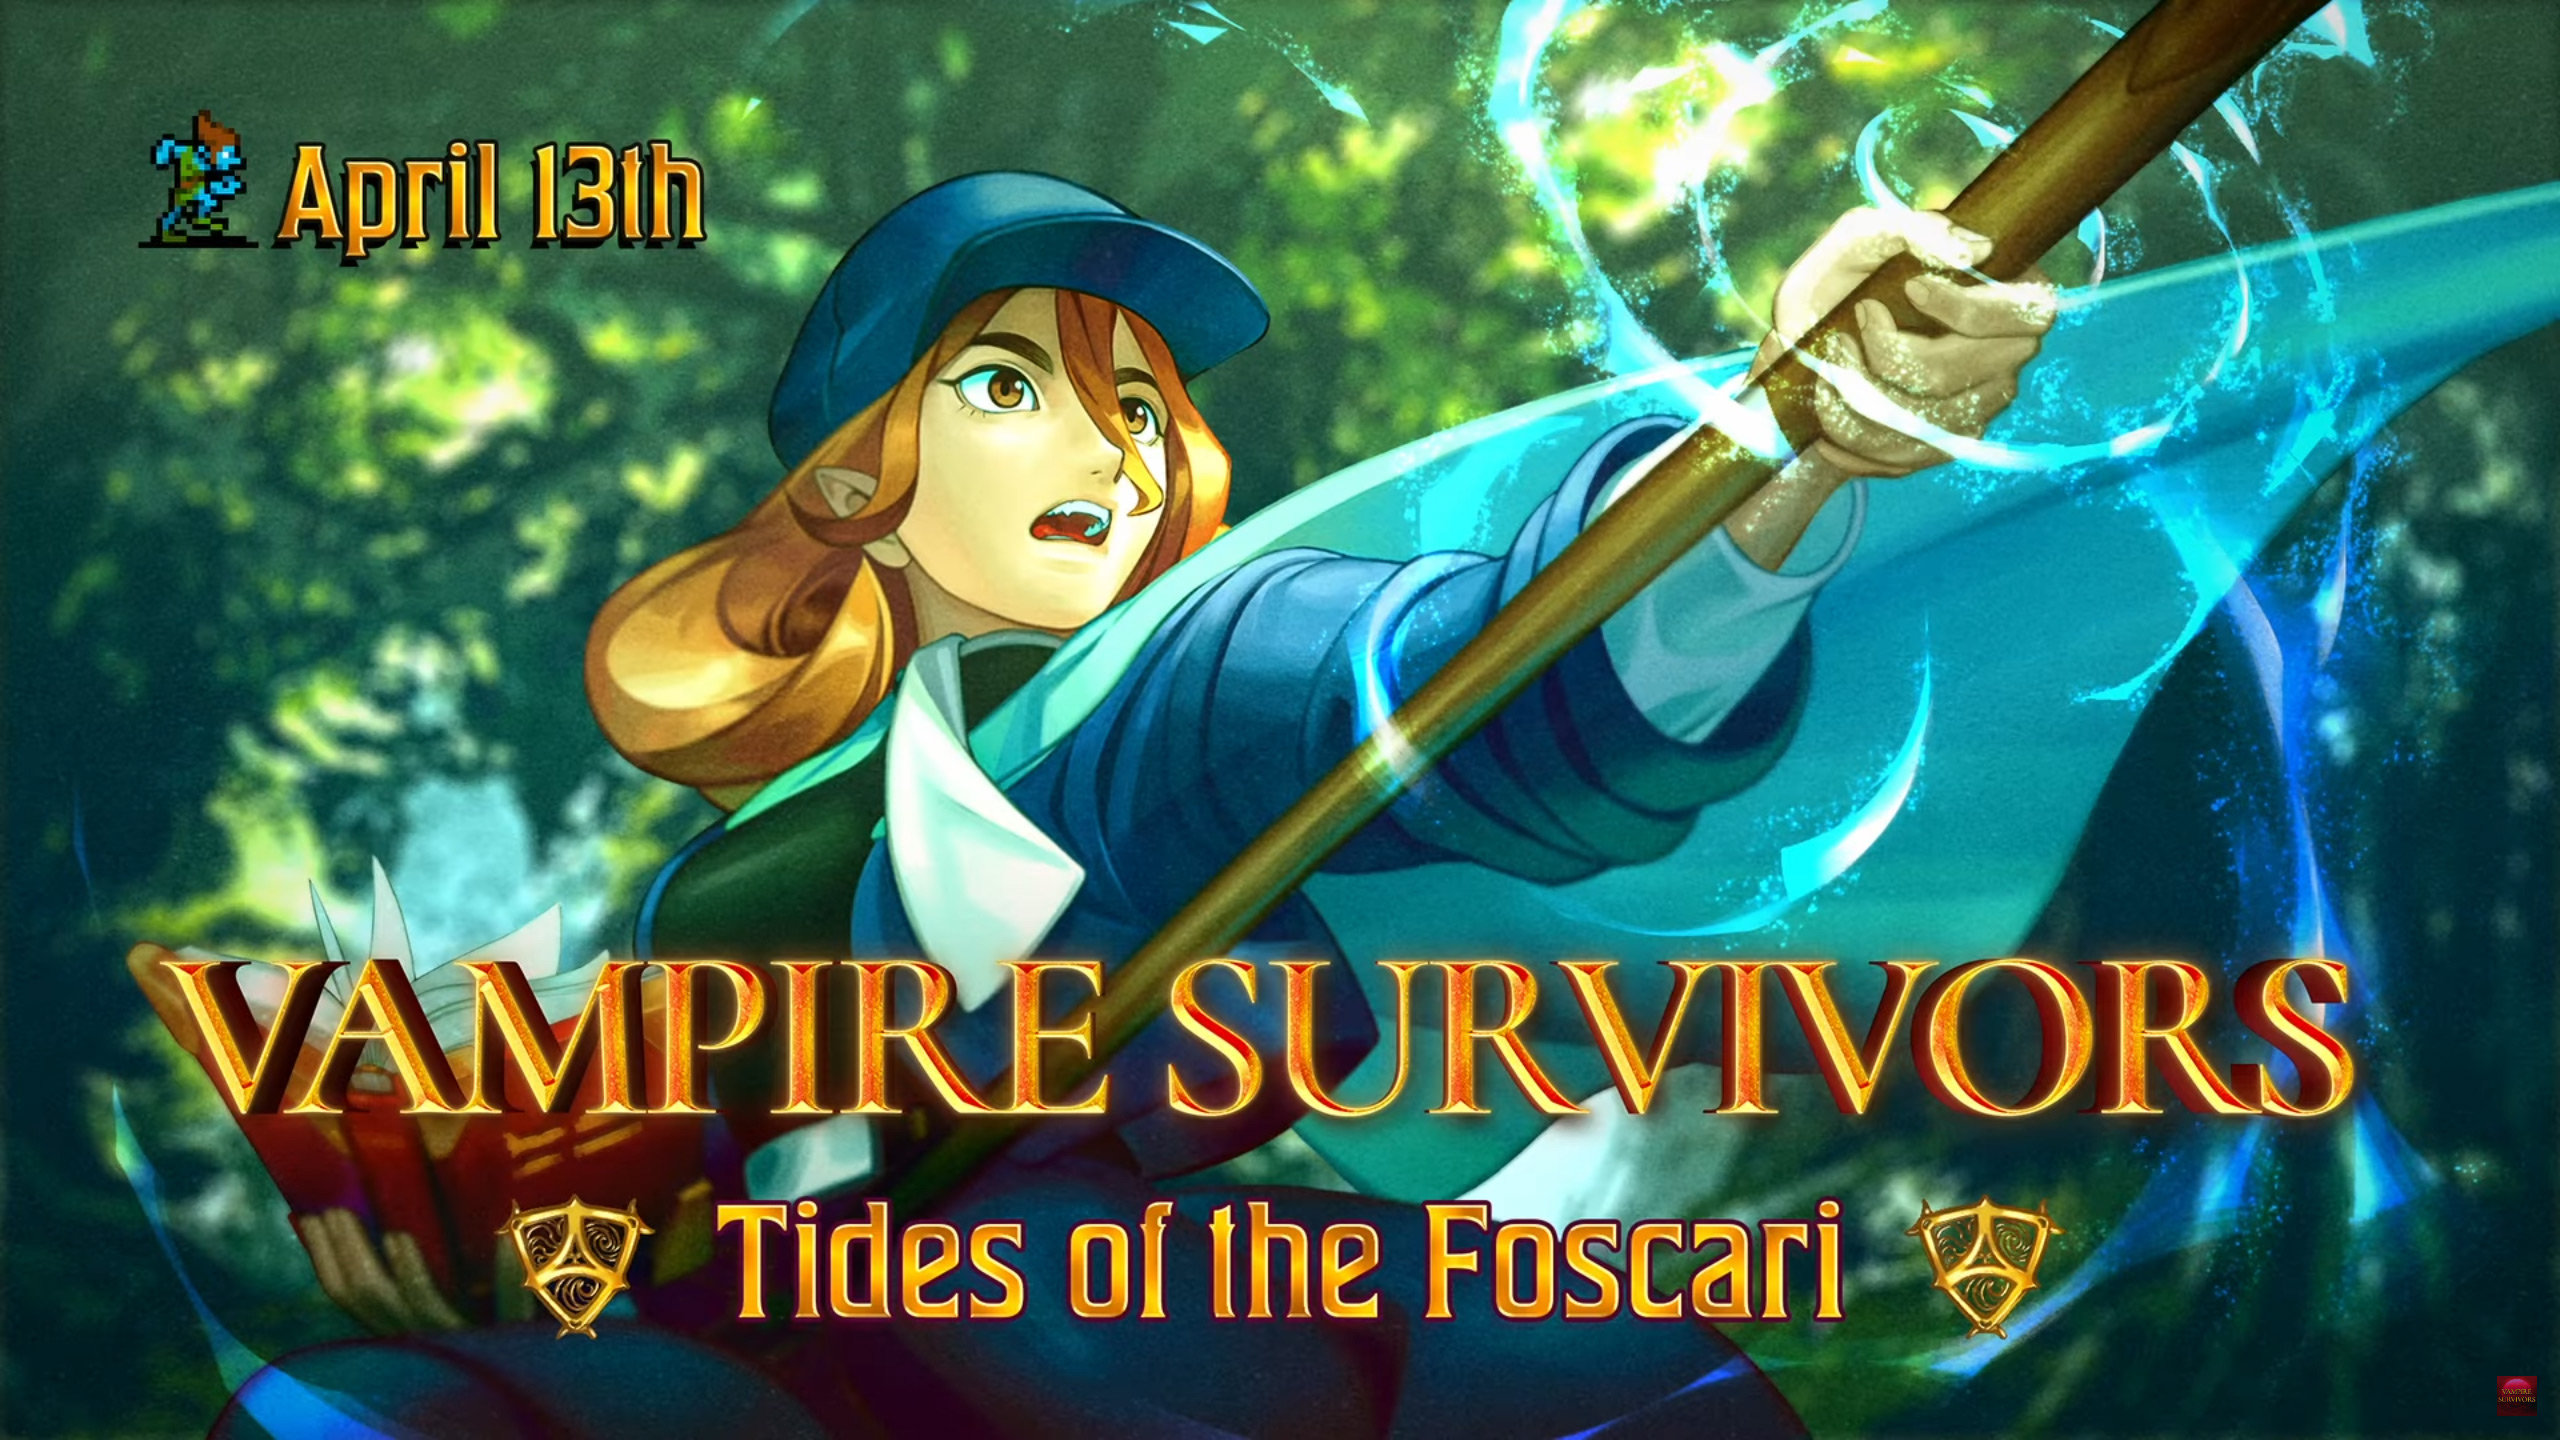 Vampire Survivors: Tides of the Foscari DLC